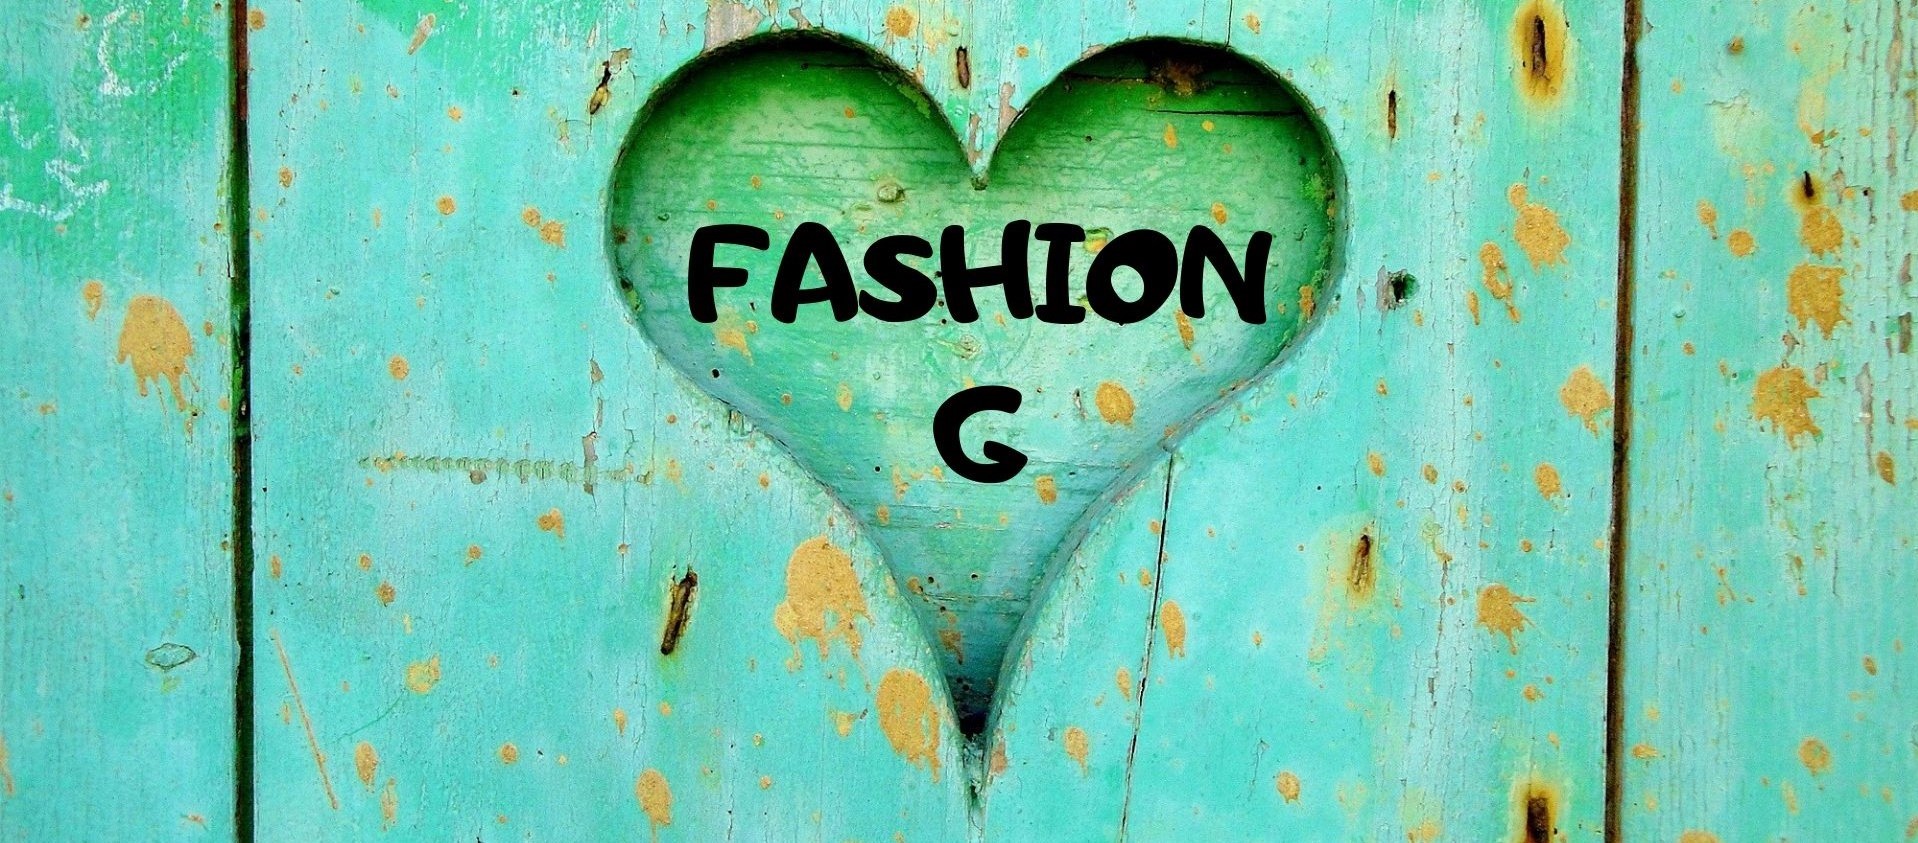 Каталог тканей магазина fashion G